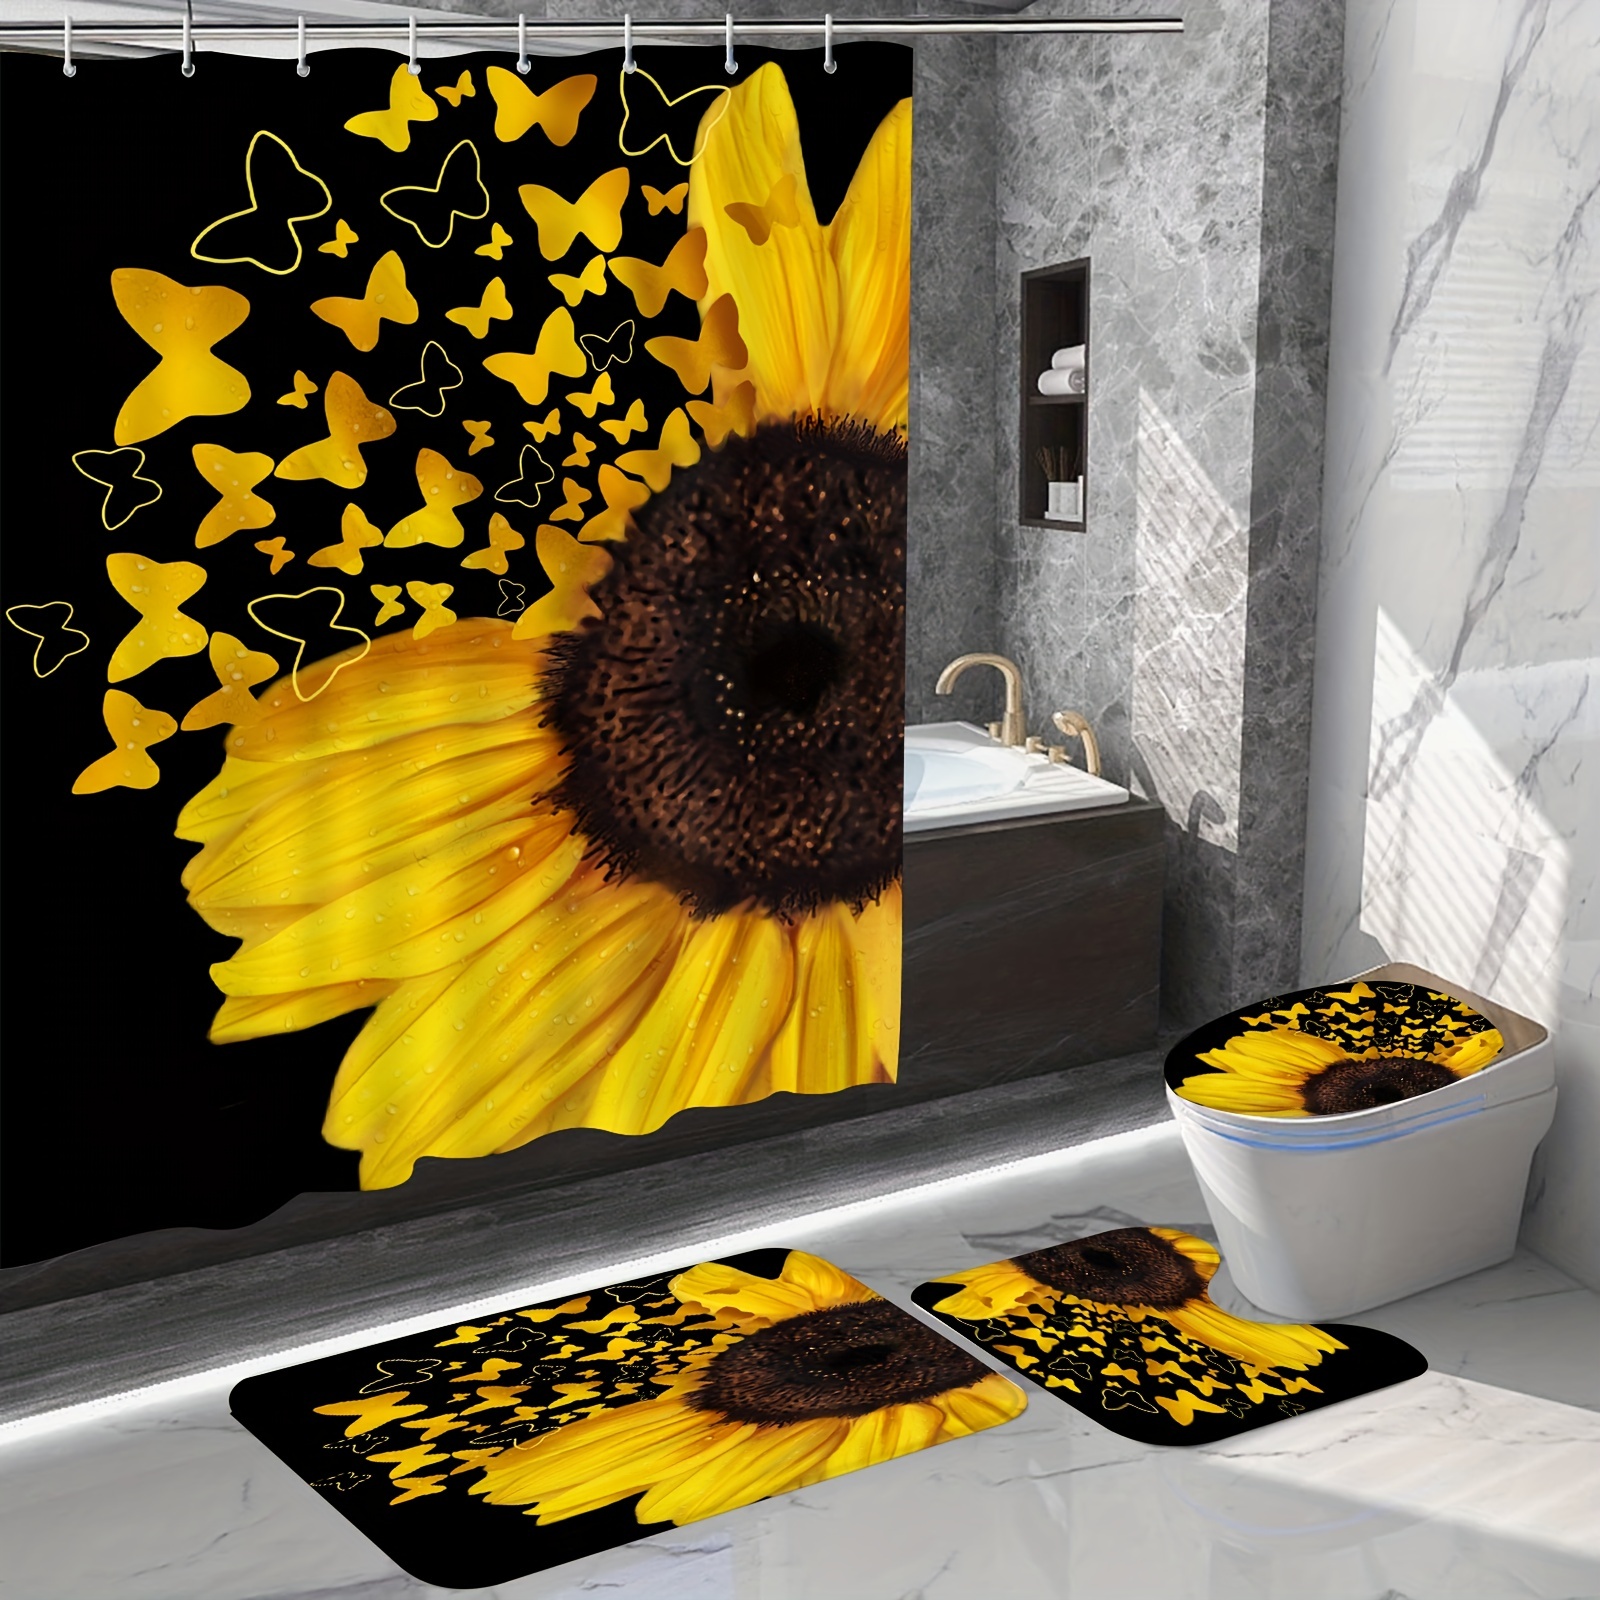 4Pcs Sunflower Shower Curtain and Rug Sets Bathroom Decor